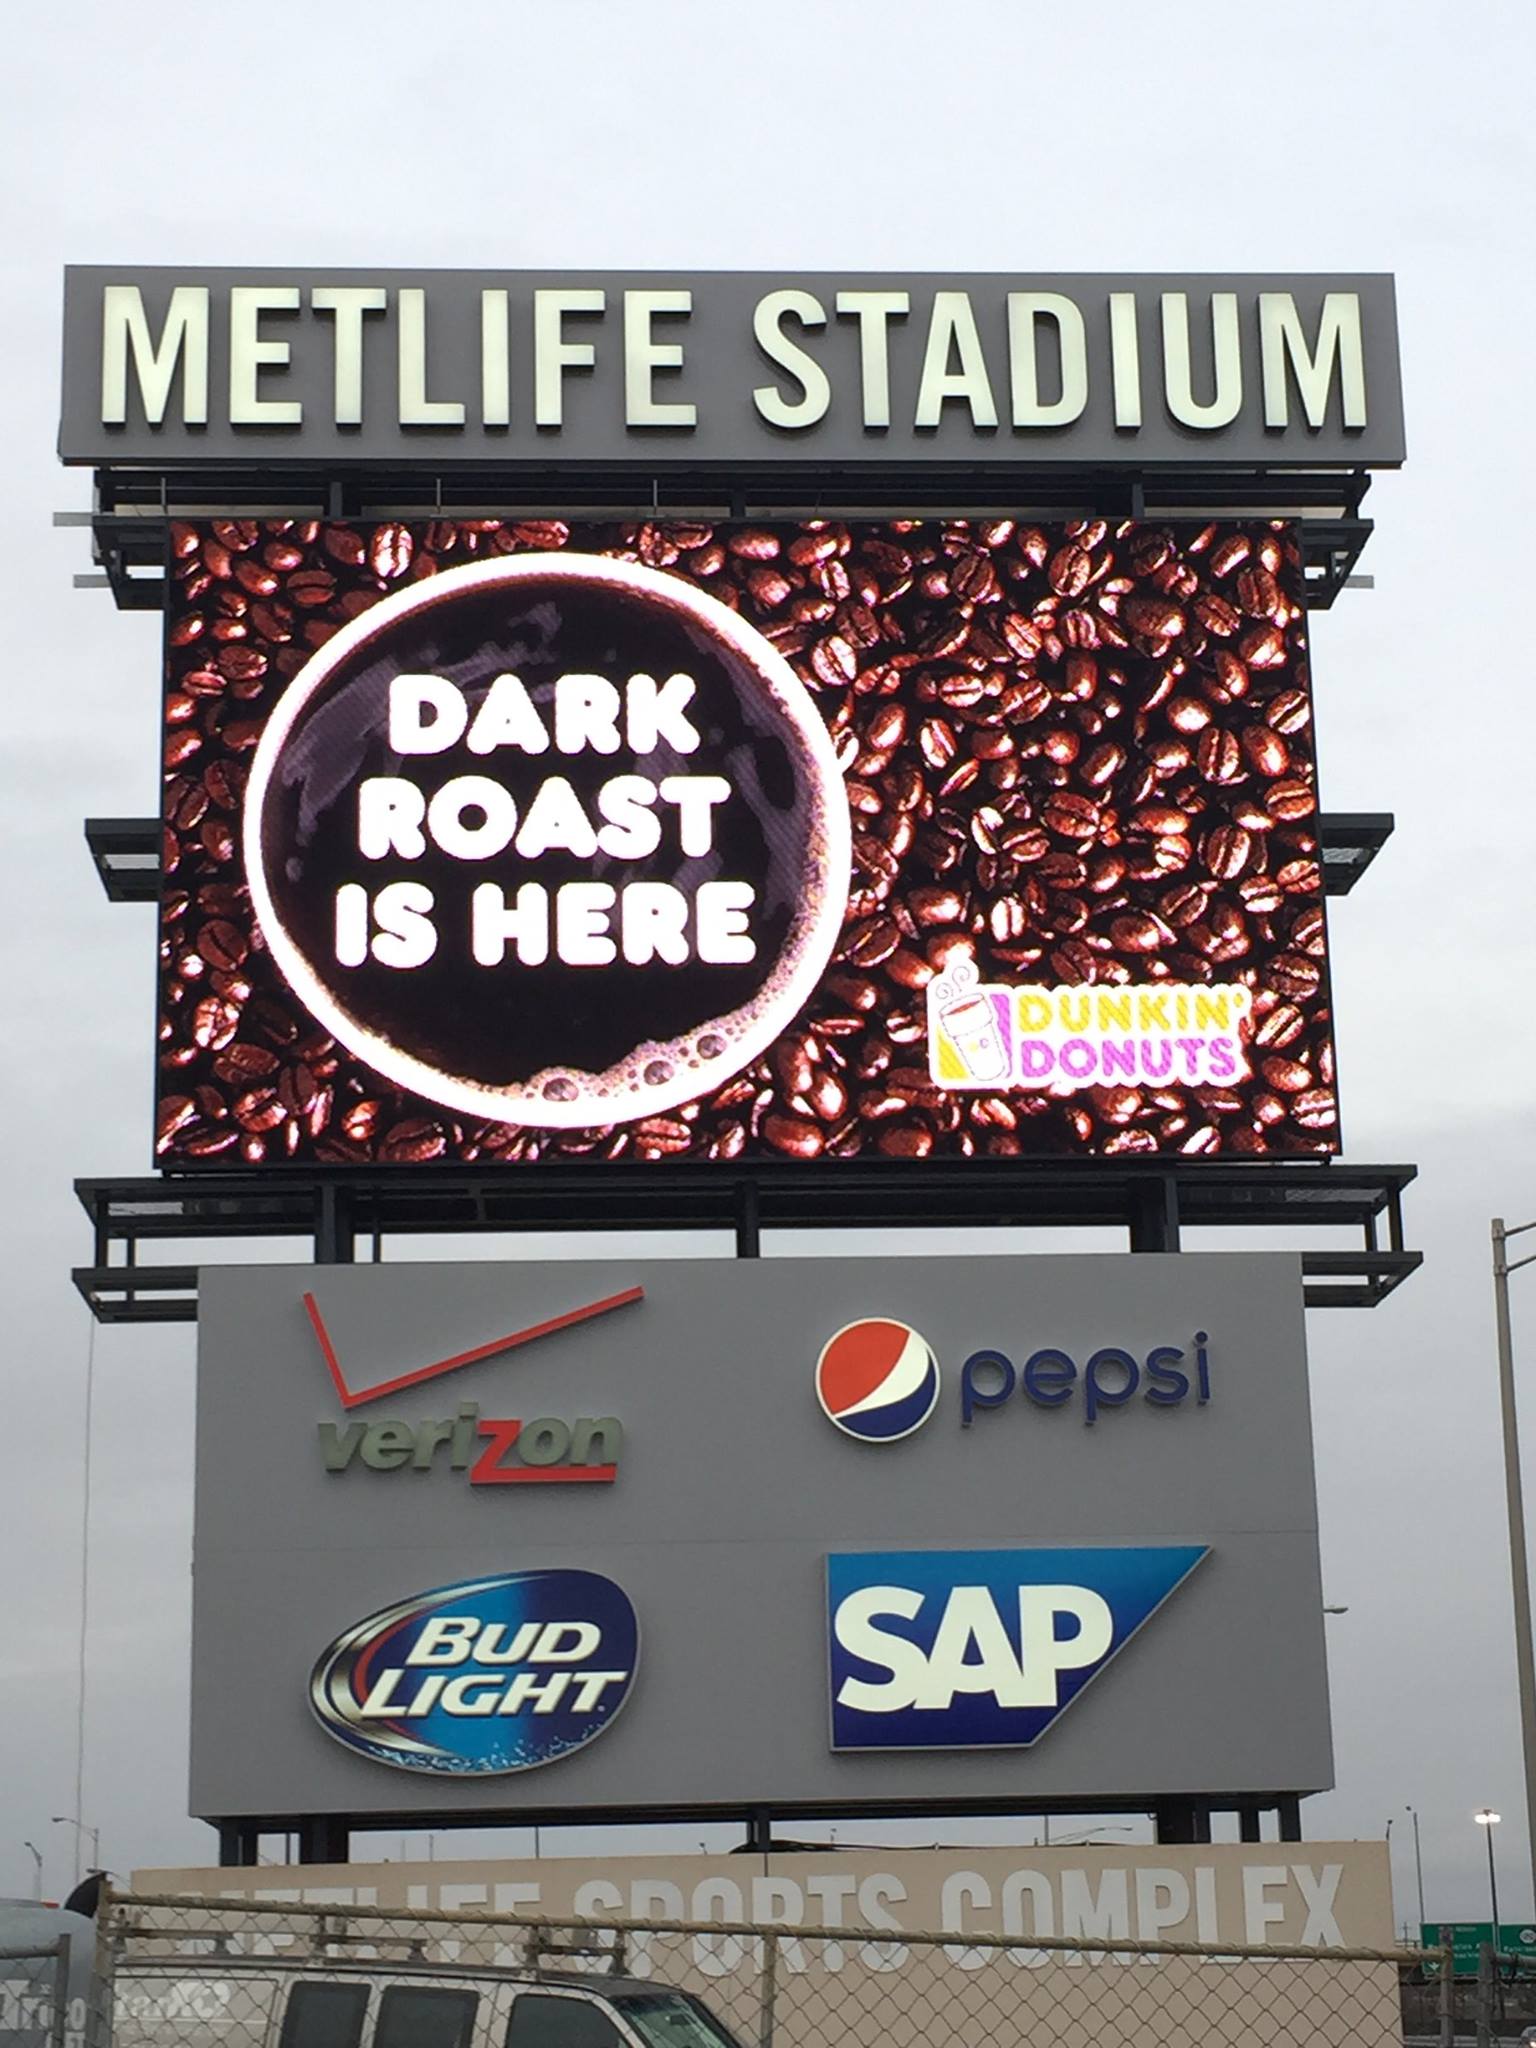 MetLife Stadium Billboard with Dunkin' Donut ad.